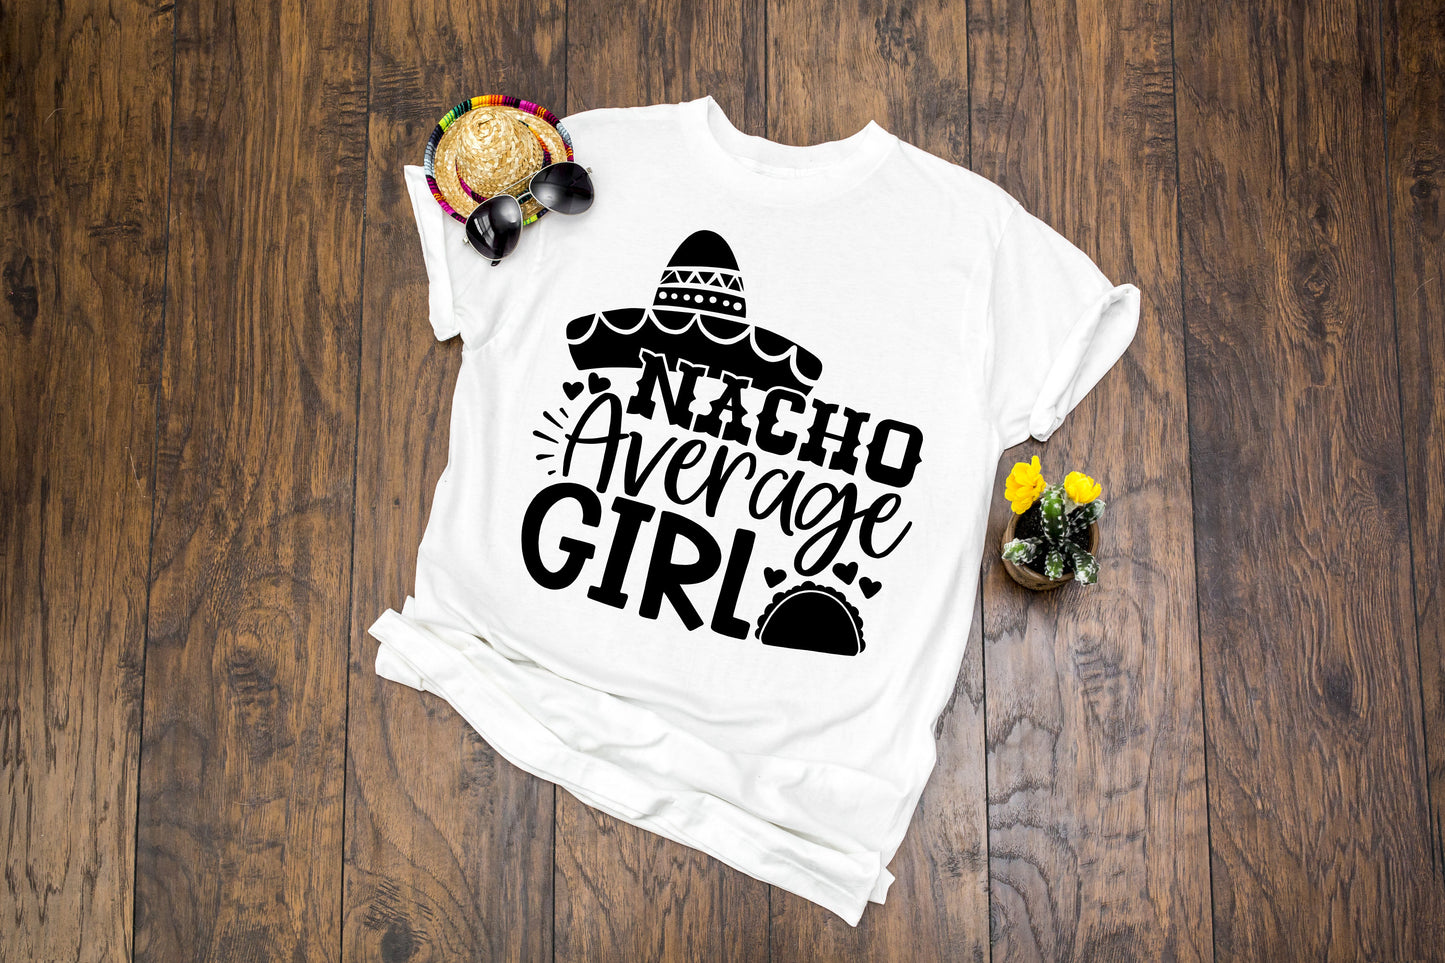 Nacho Average Girl Unisex Adult t-shirt - Cinco de Mayo shirt - Funny Women's Shirt - Mexican Vacation Tee - Spring Break Shirt